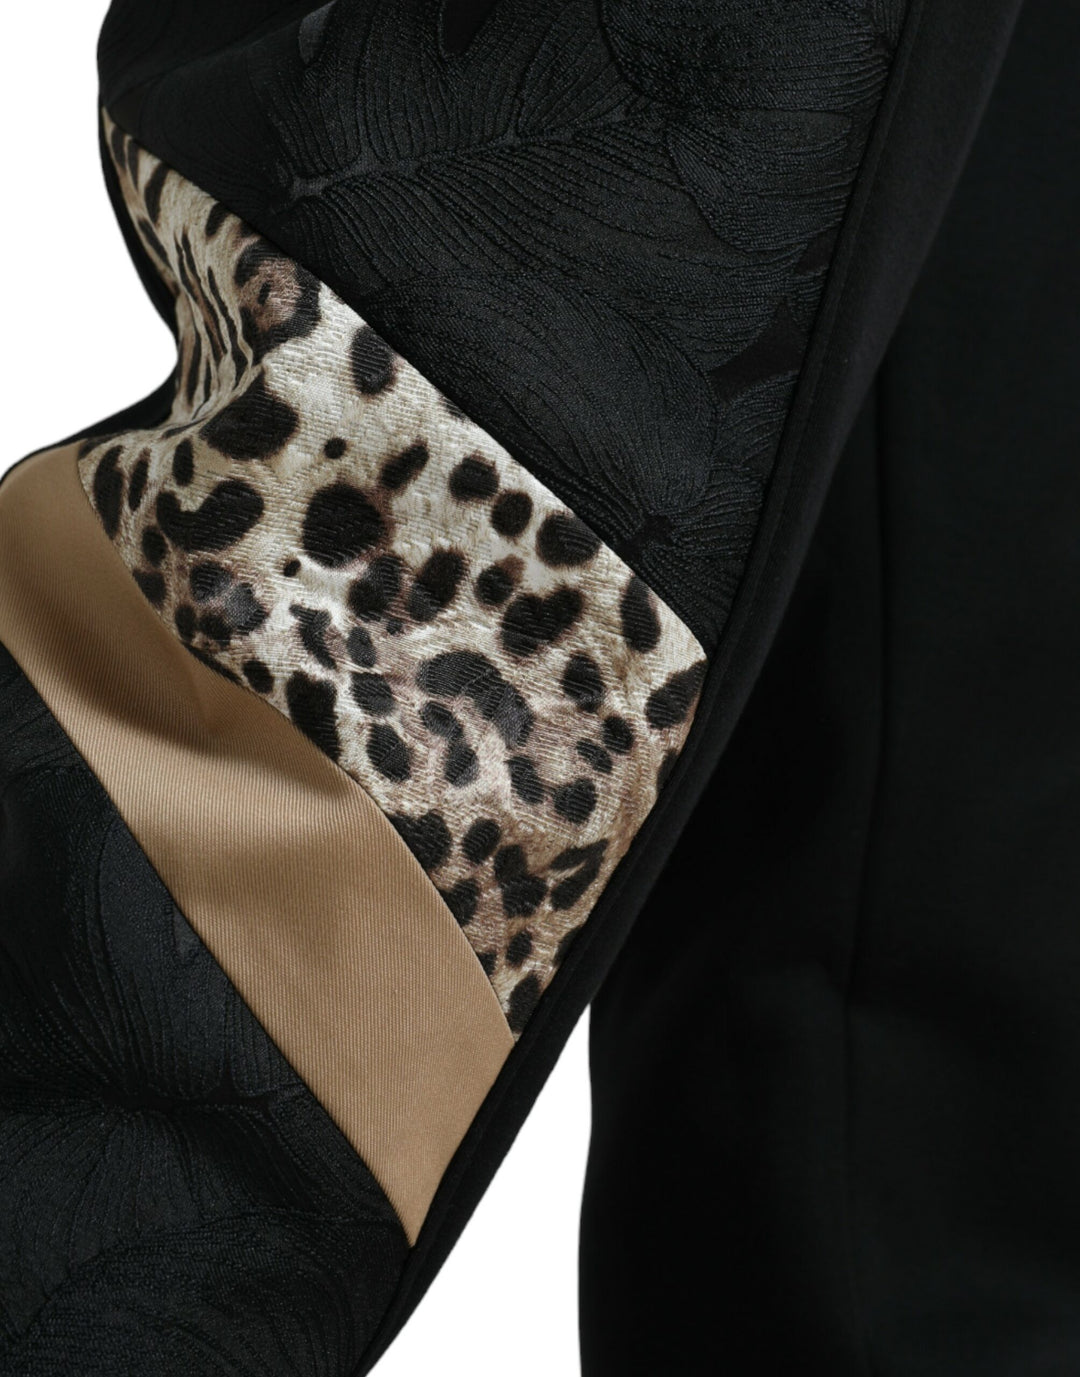 Dolce & Gabbana Black Cotton Slim Stretch Jogger Pants